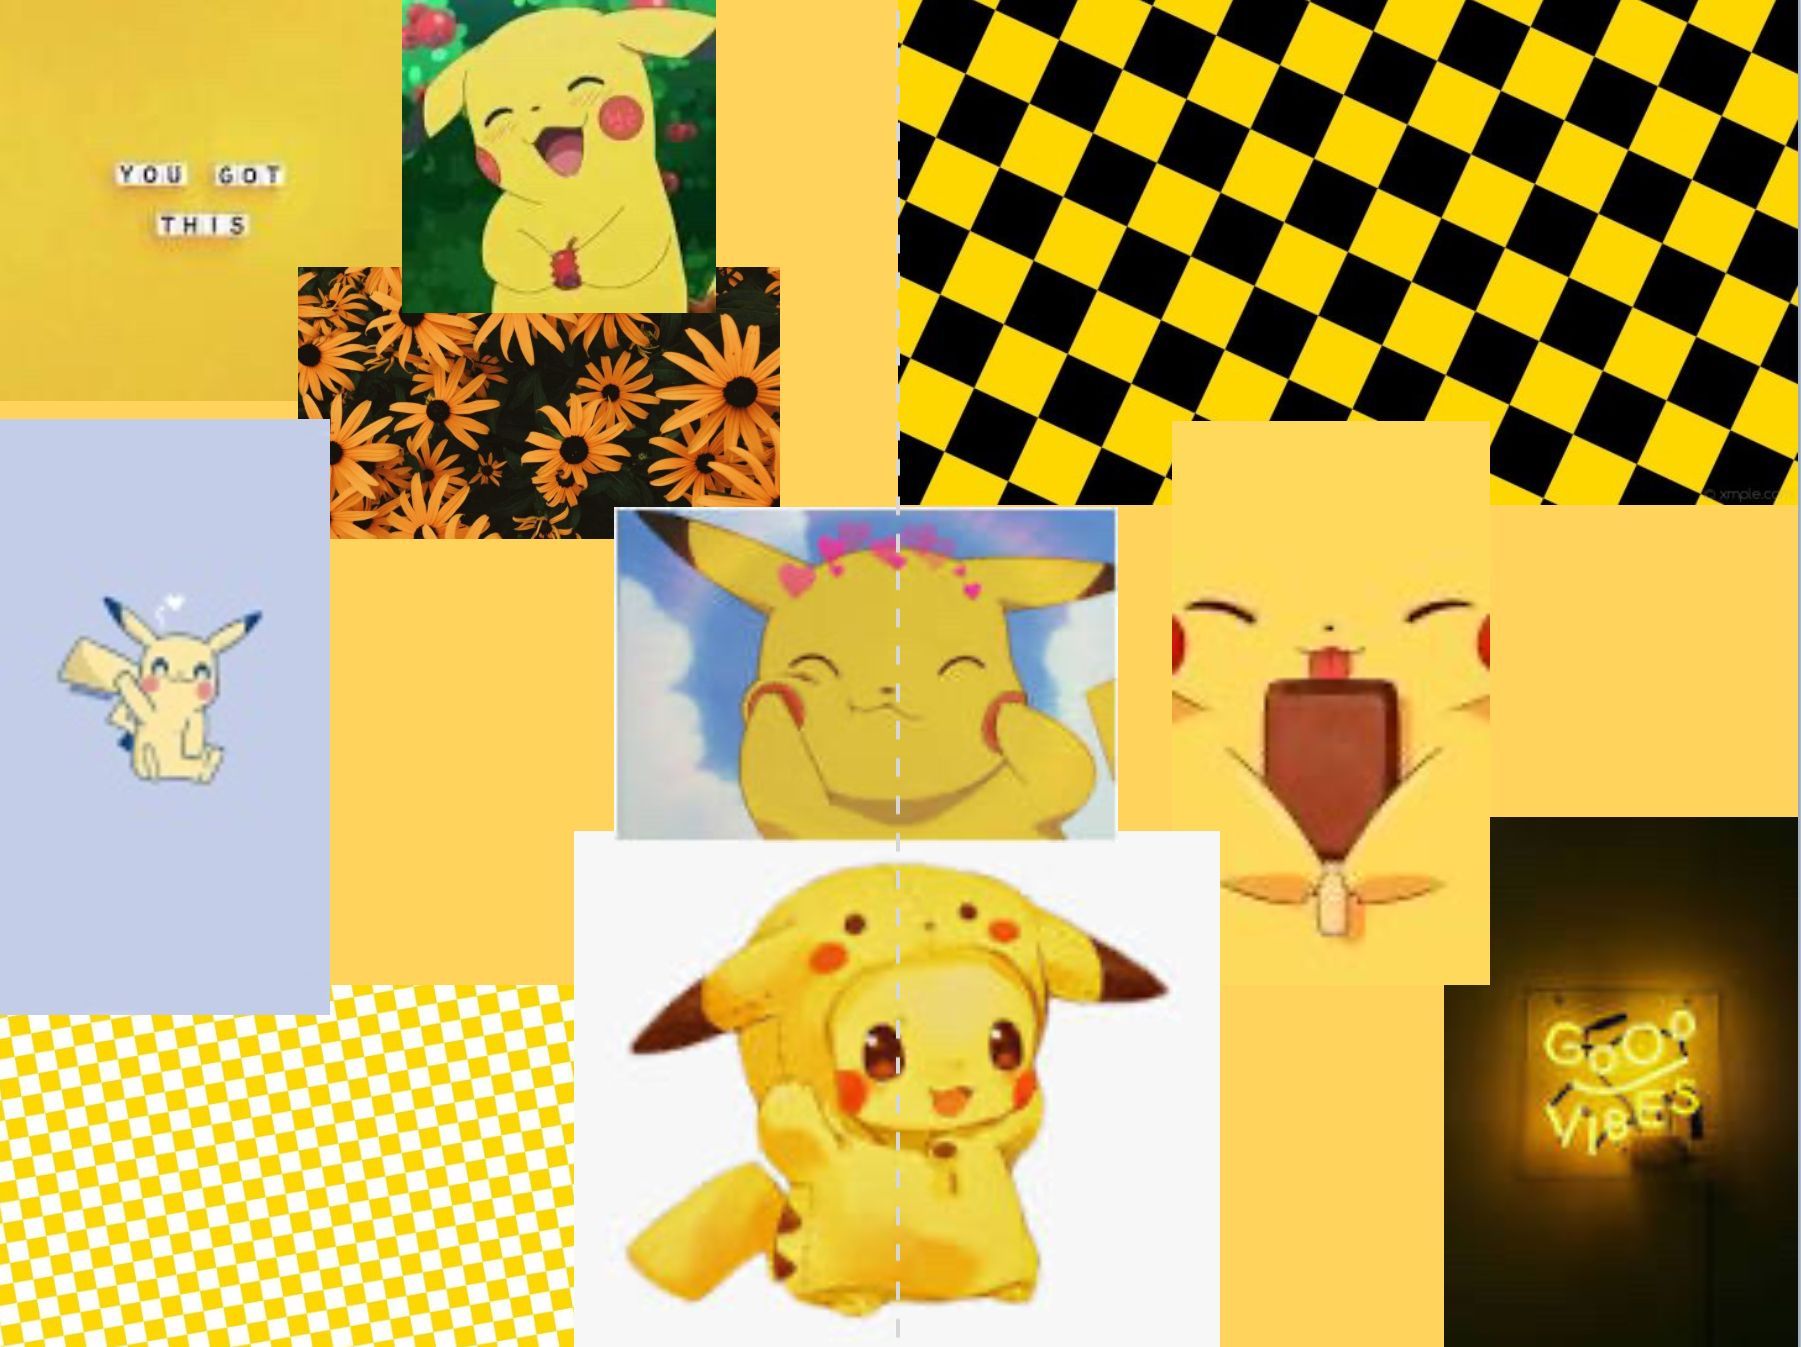 Pikachu aesthetic (original)